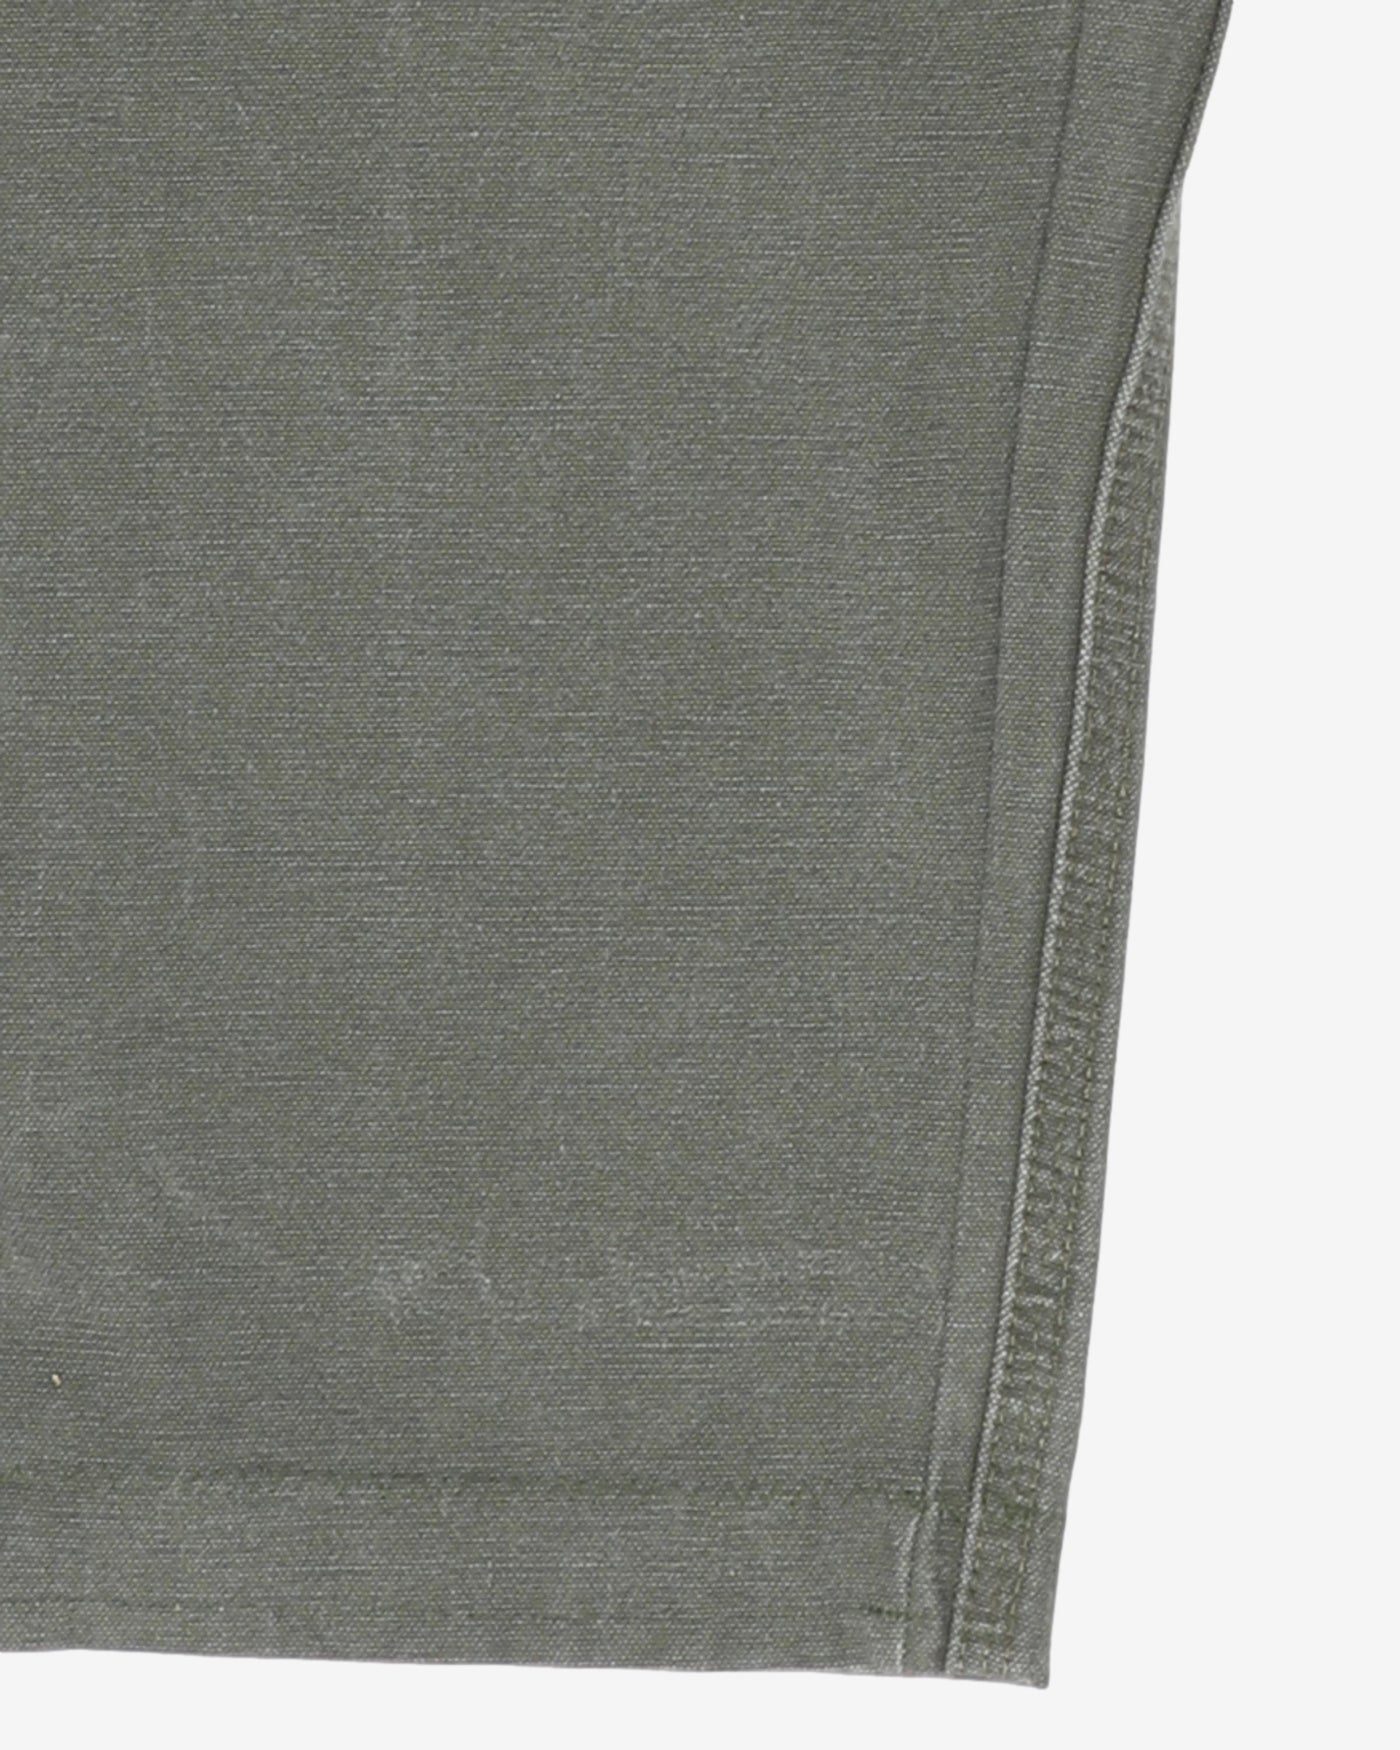 carhartt agave green workwear denim trousers - w32 l27